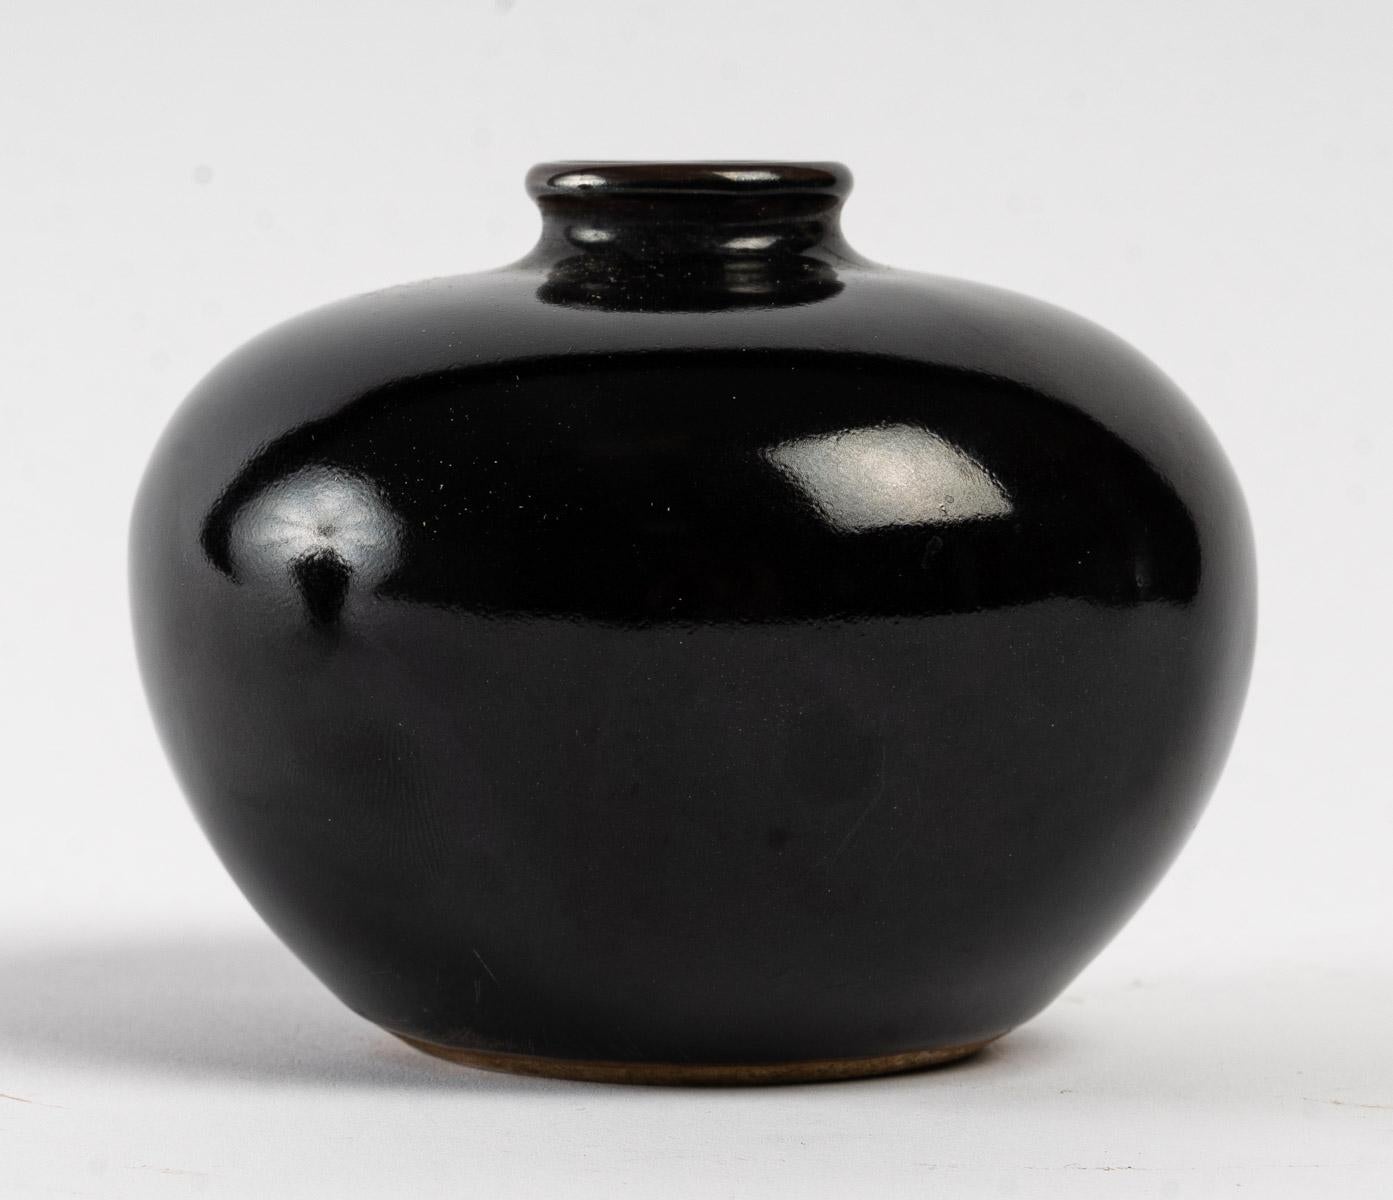 Two small mirror black enamelled vases, China, 20th century.
H: 8.5 cm, D: 8.5 cm
H: 12 cm, D: 8 cm